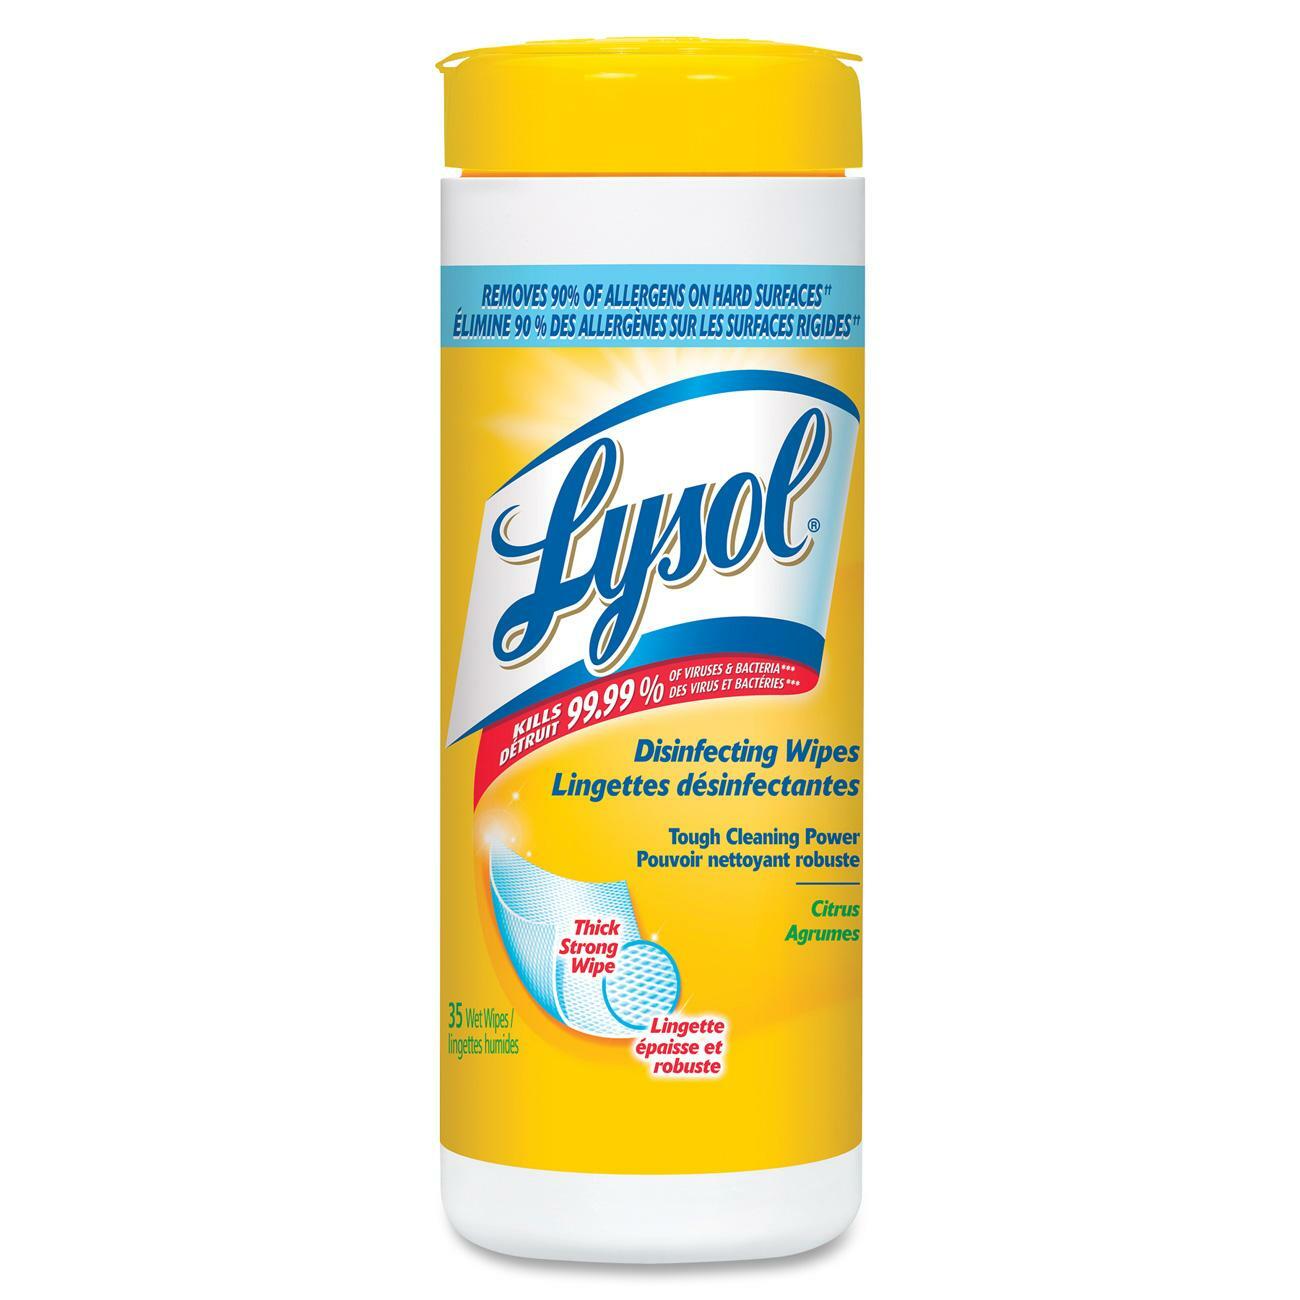 Lysol wipes